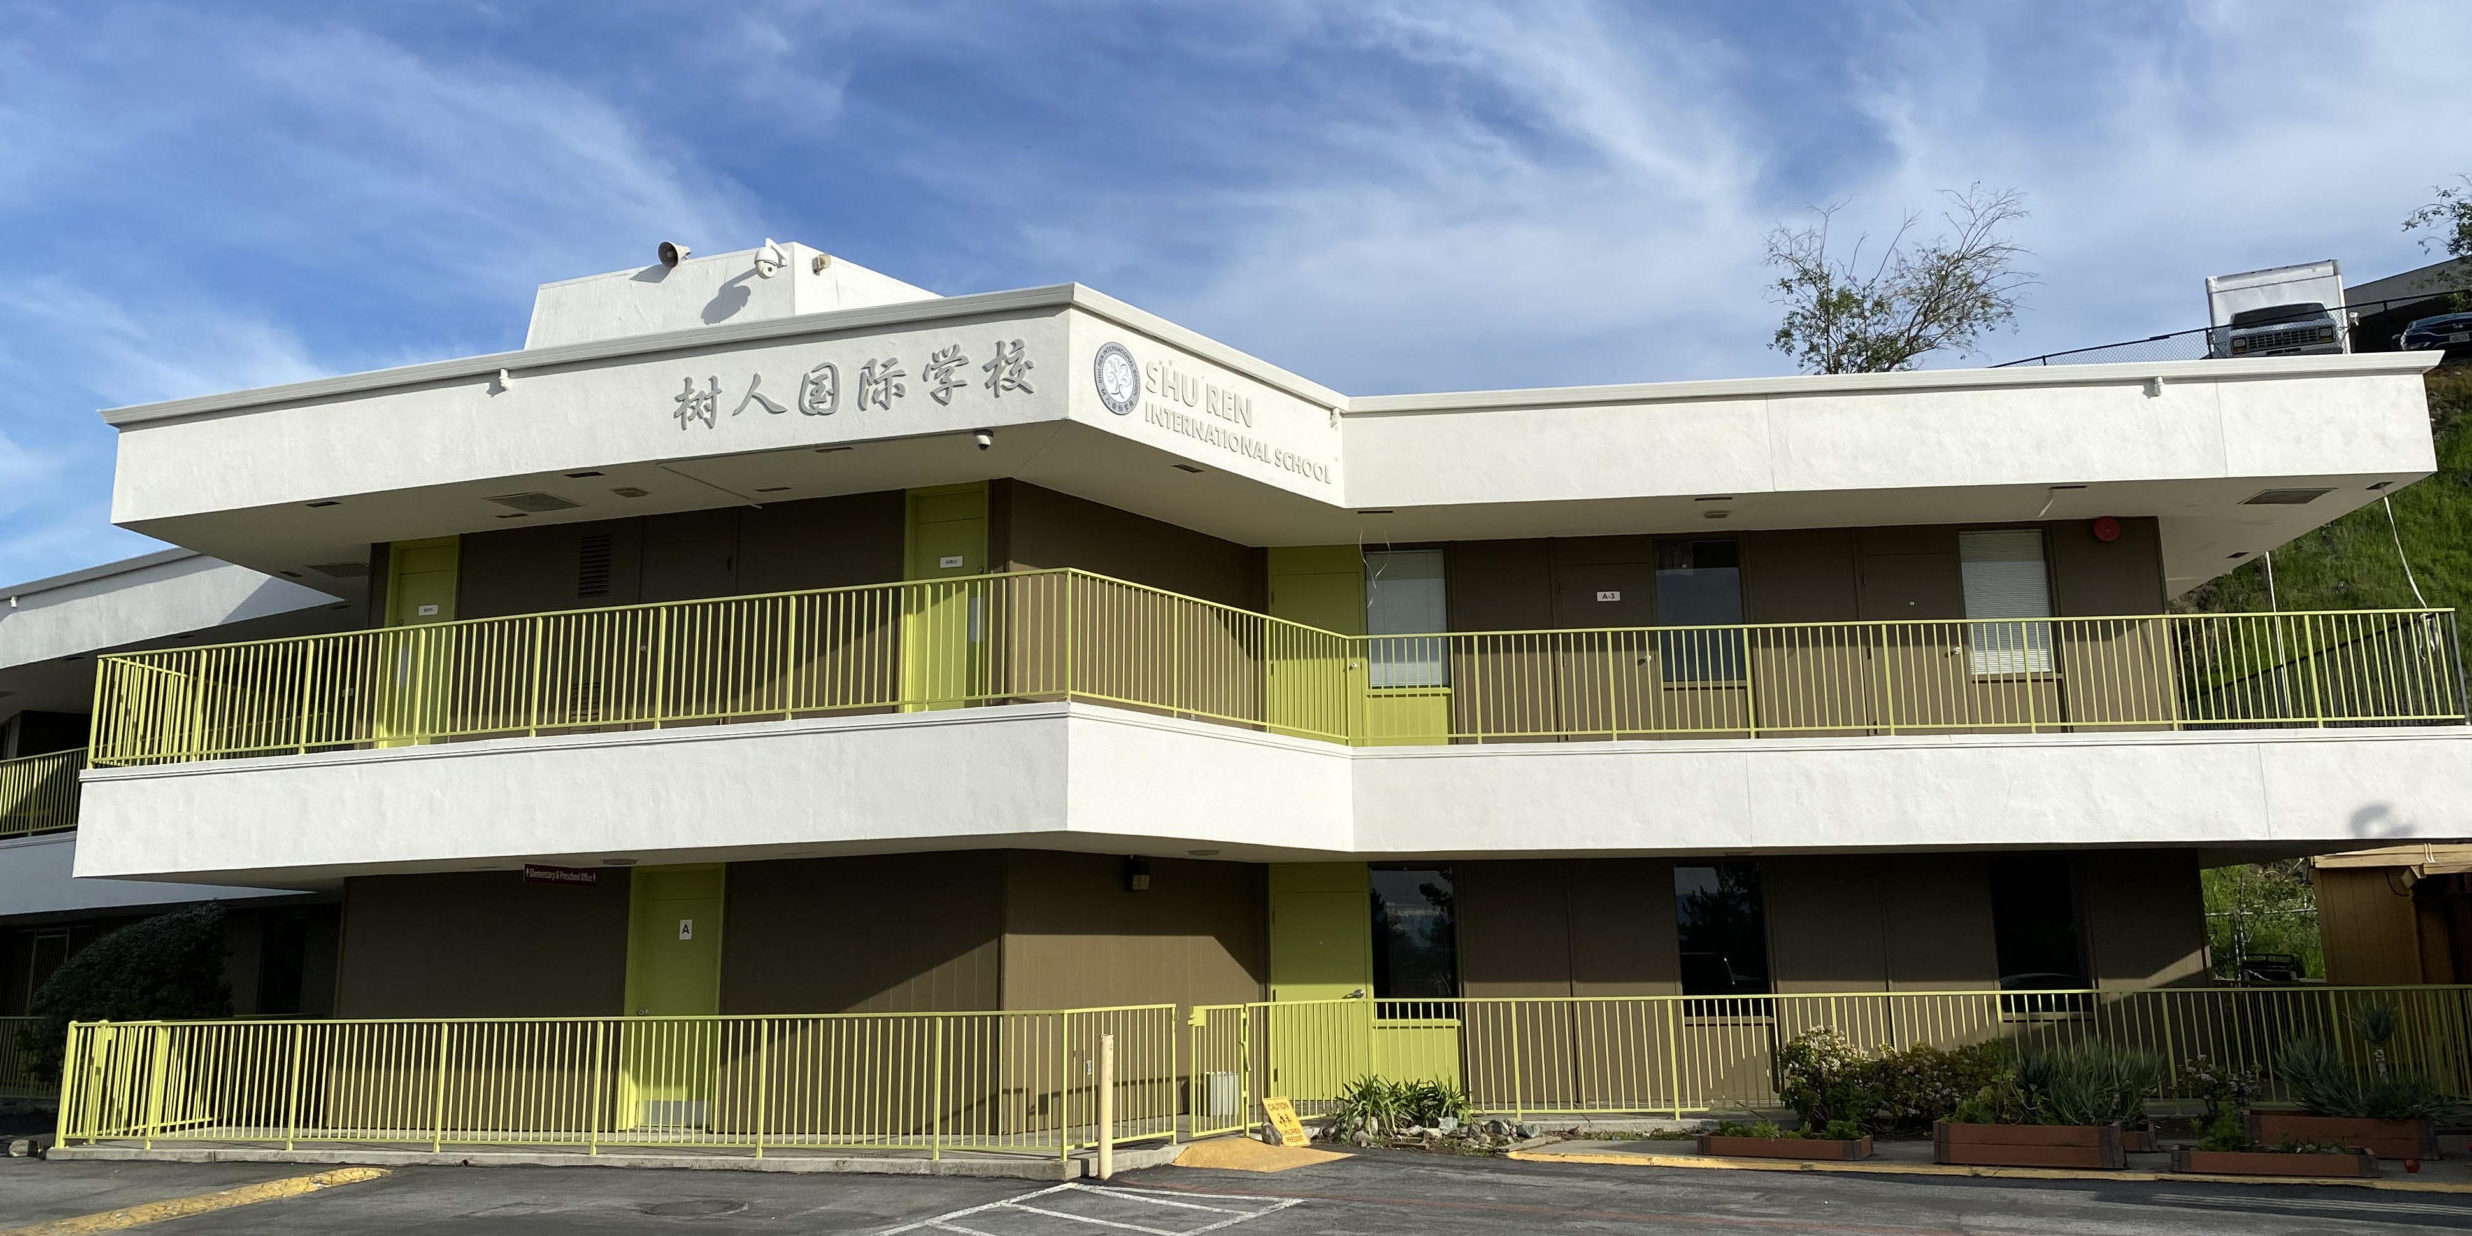 Shu Ren Mandarin Immersion School in San Jose